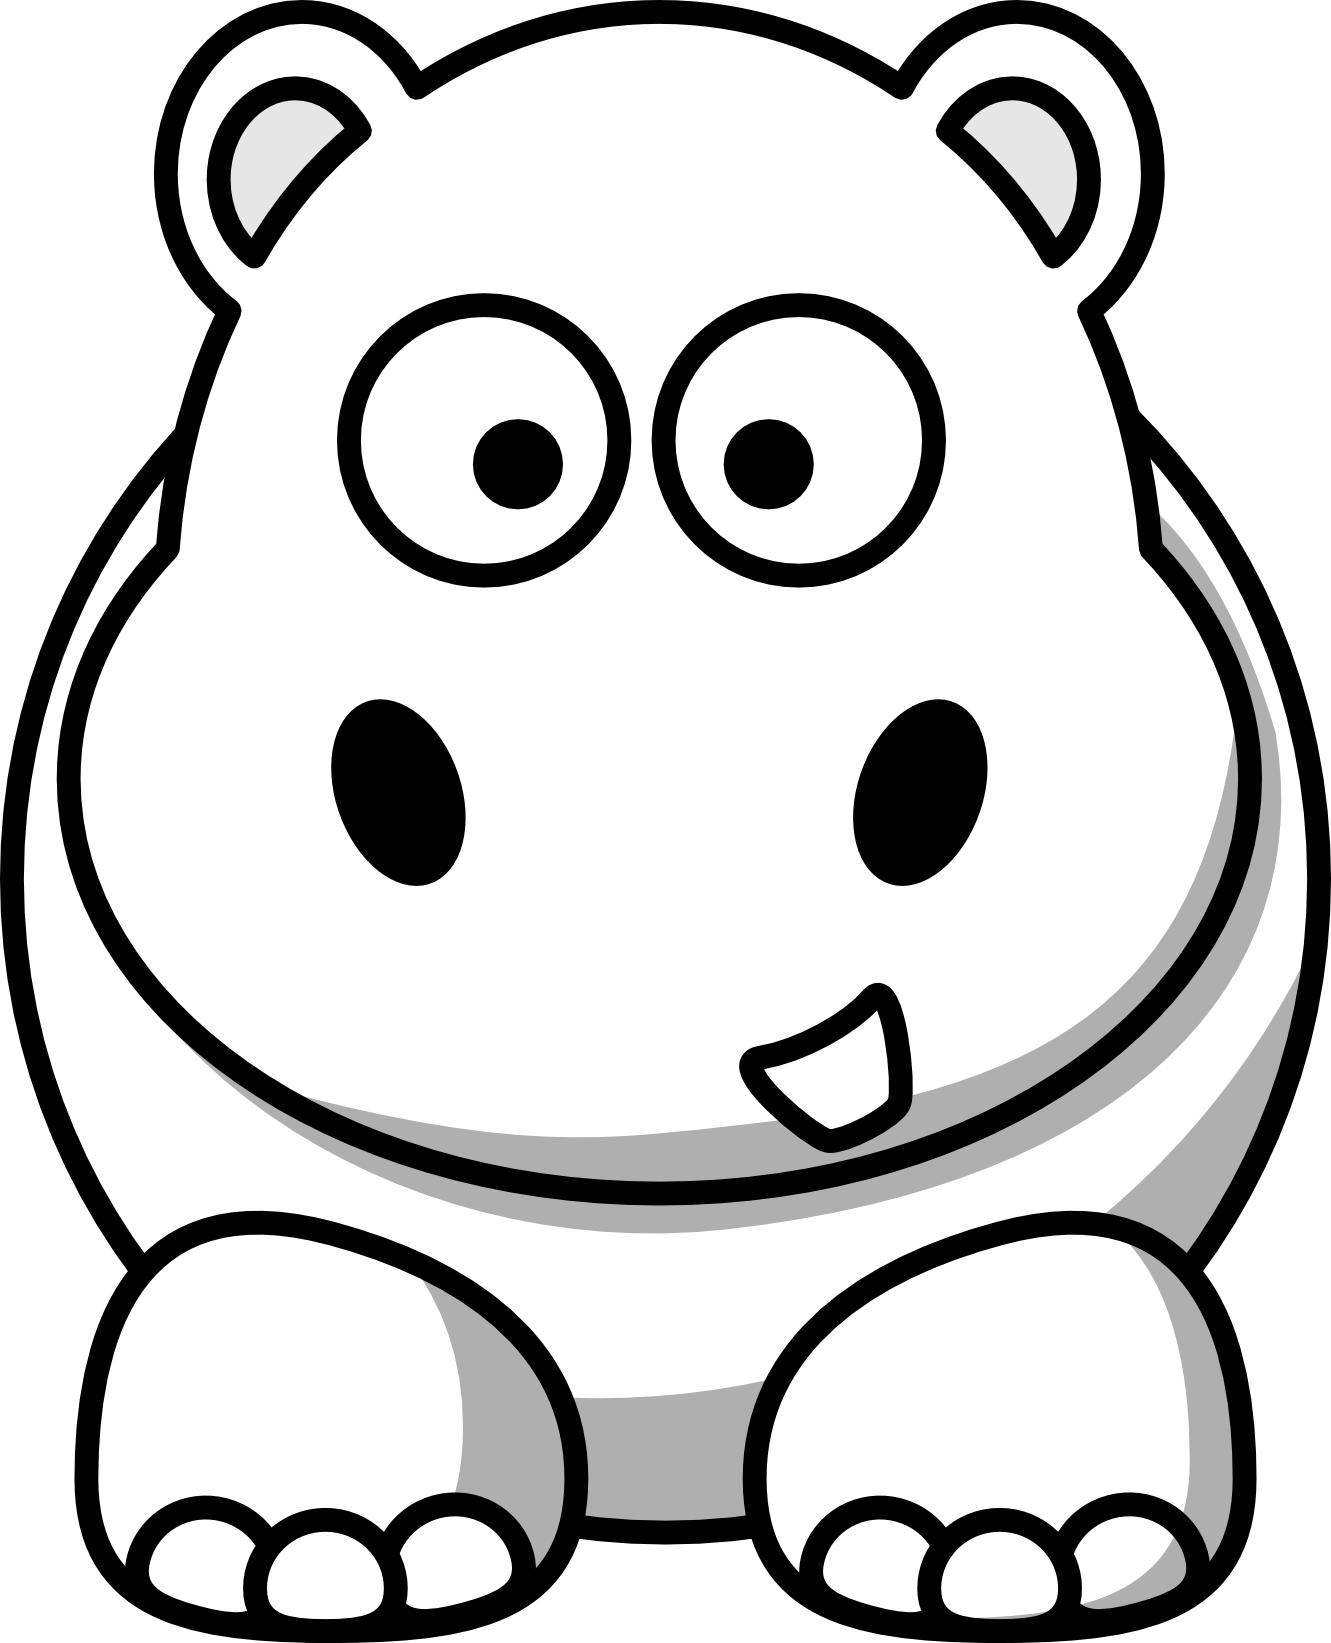 Cartoon hippo clipart